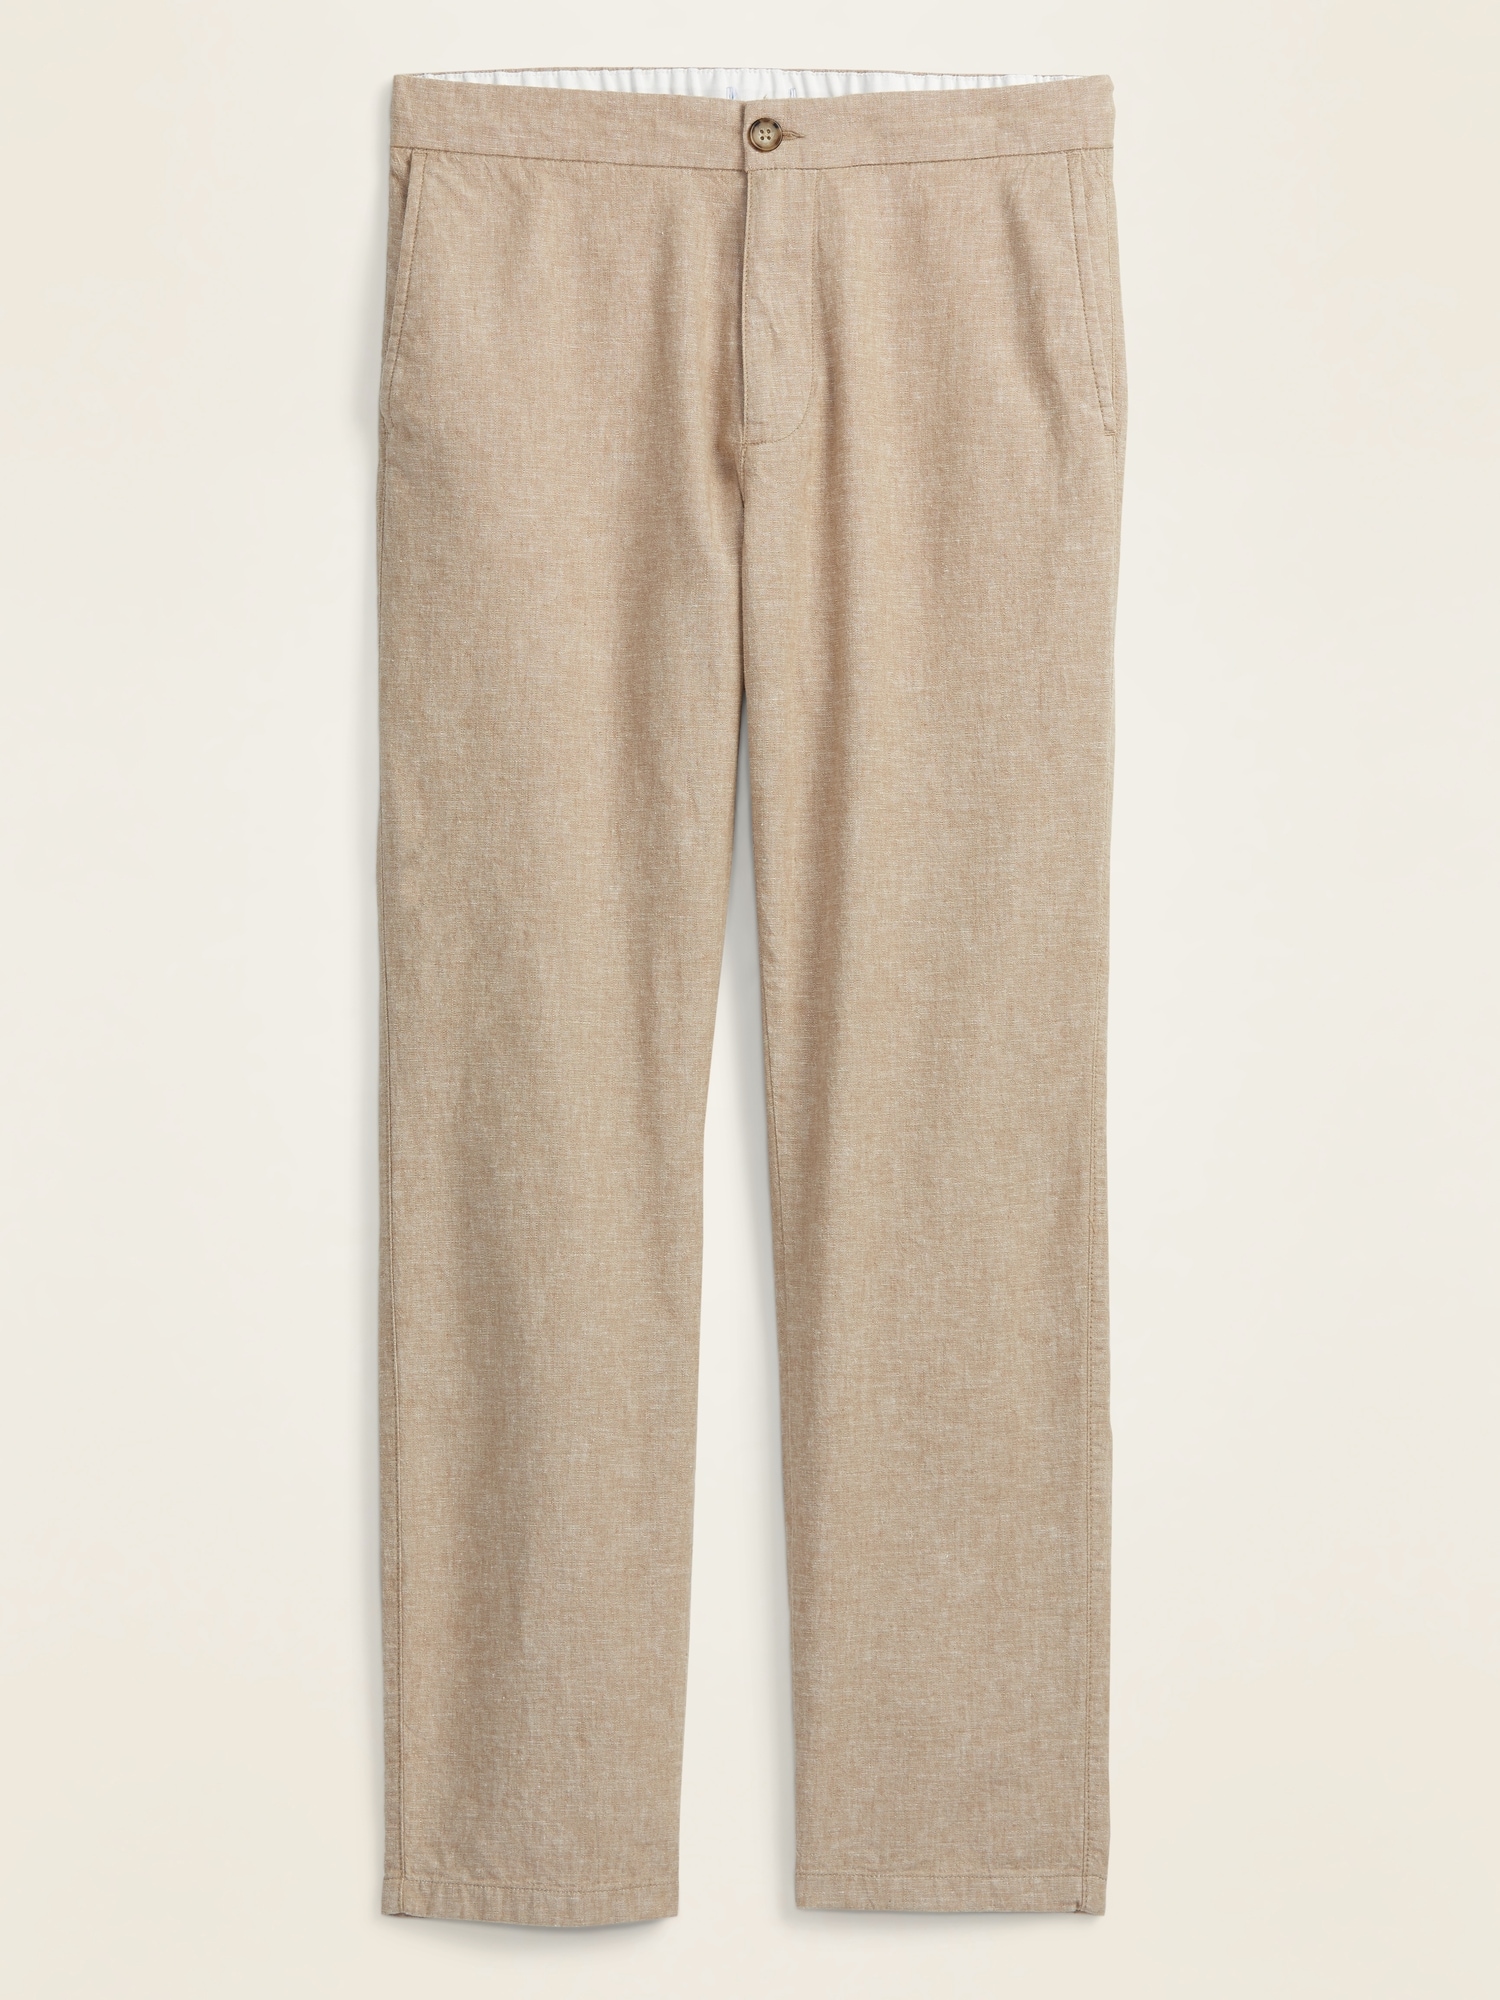 Slim Built-In Flex Linen-Blend Interior Drawstring Pants for Men | Old Navy